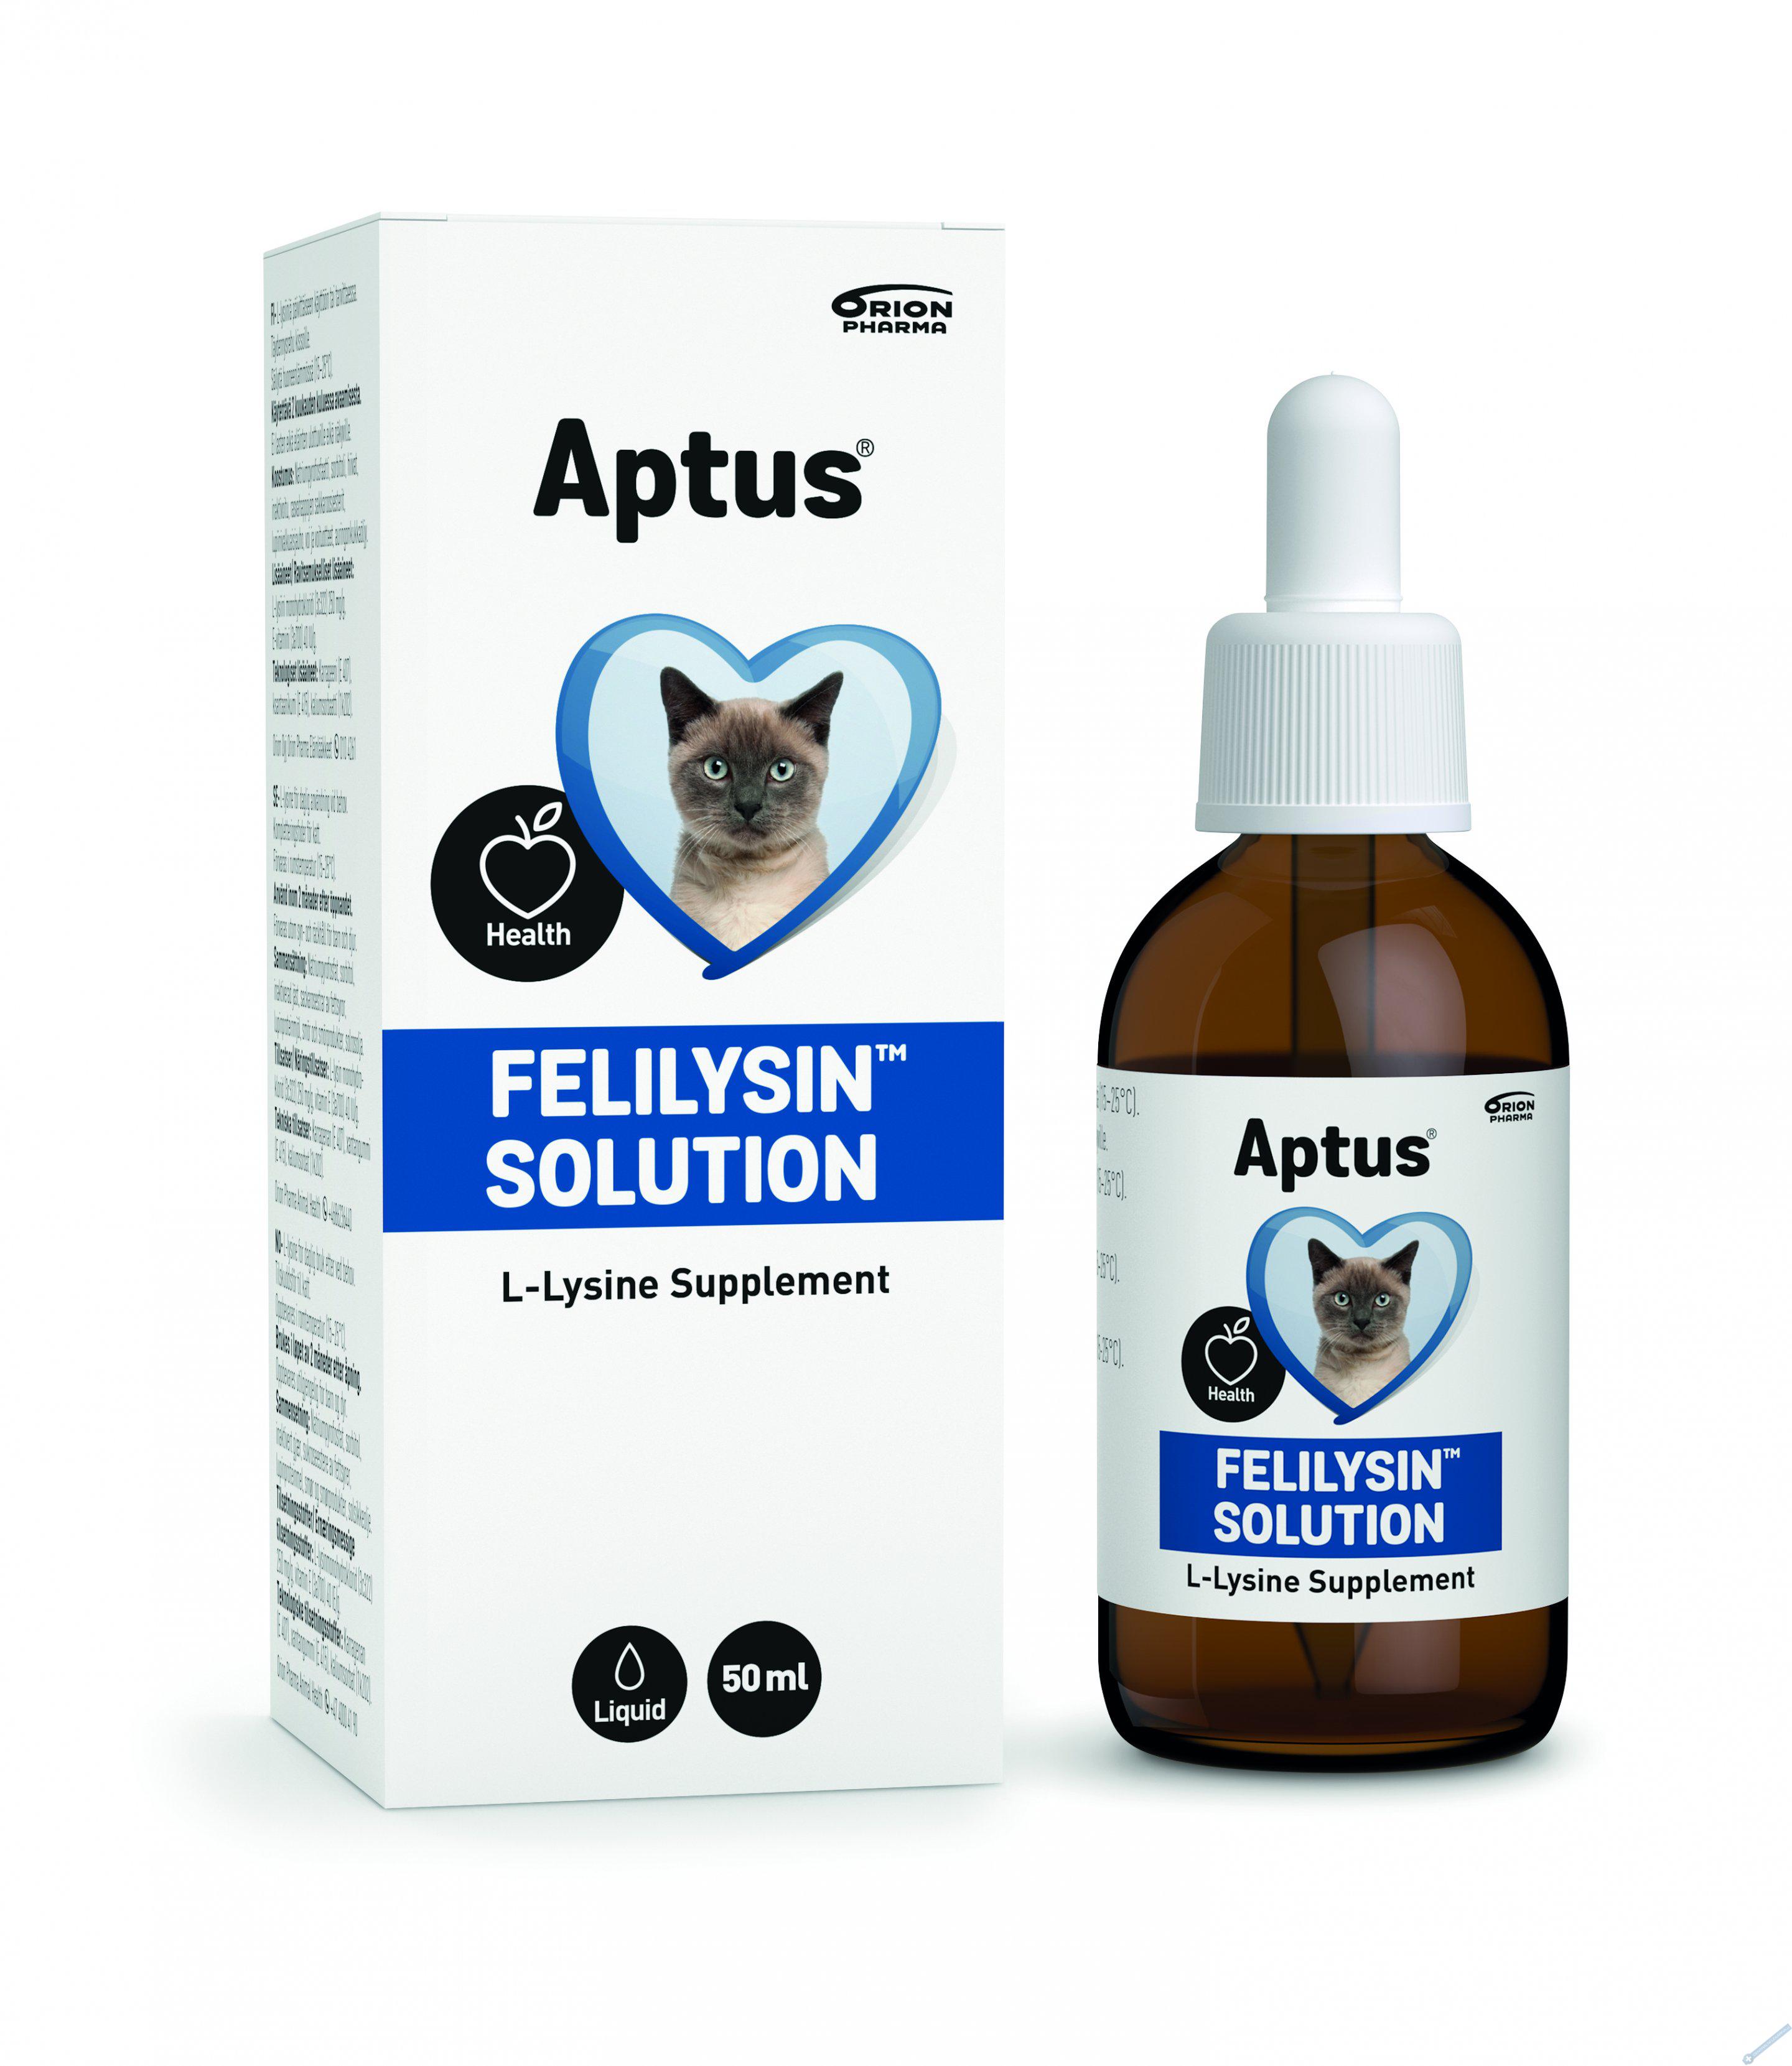 Aptus Felilysin Solution 50ml